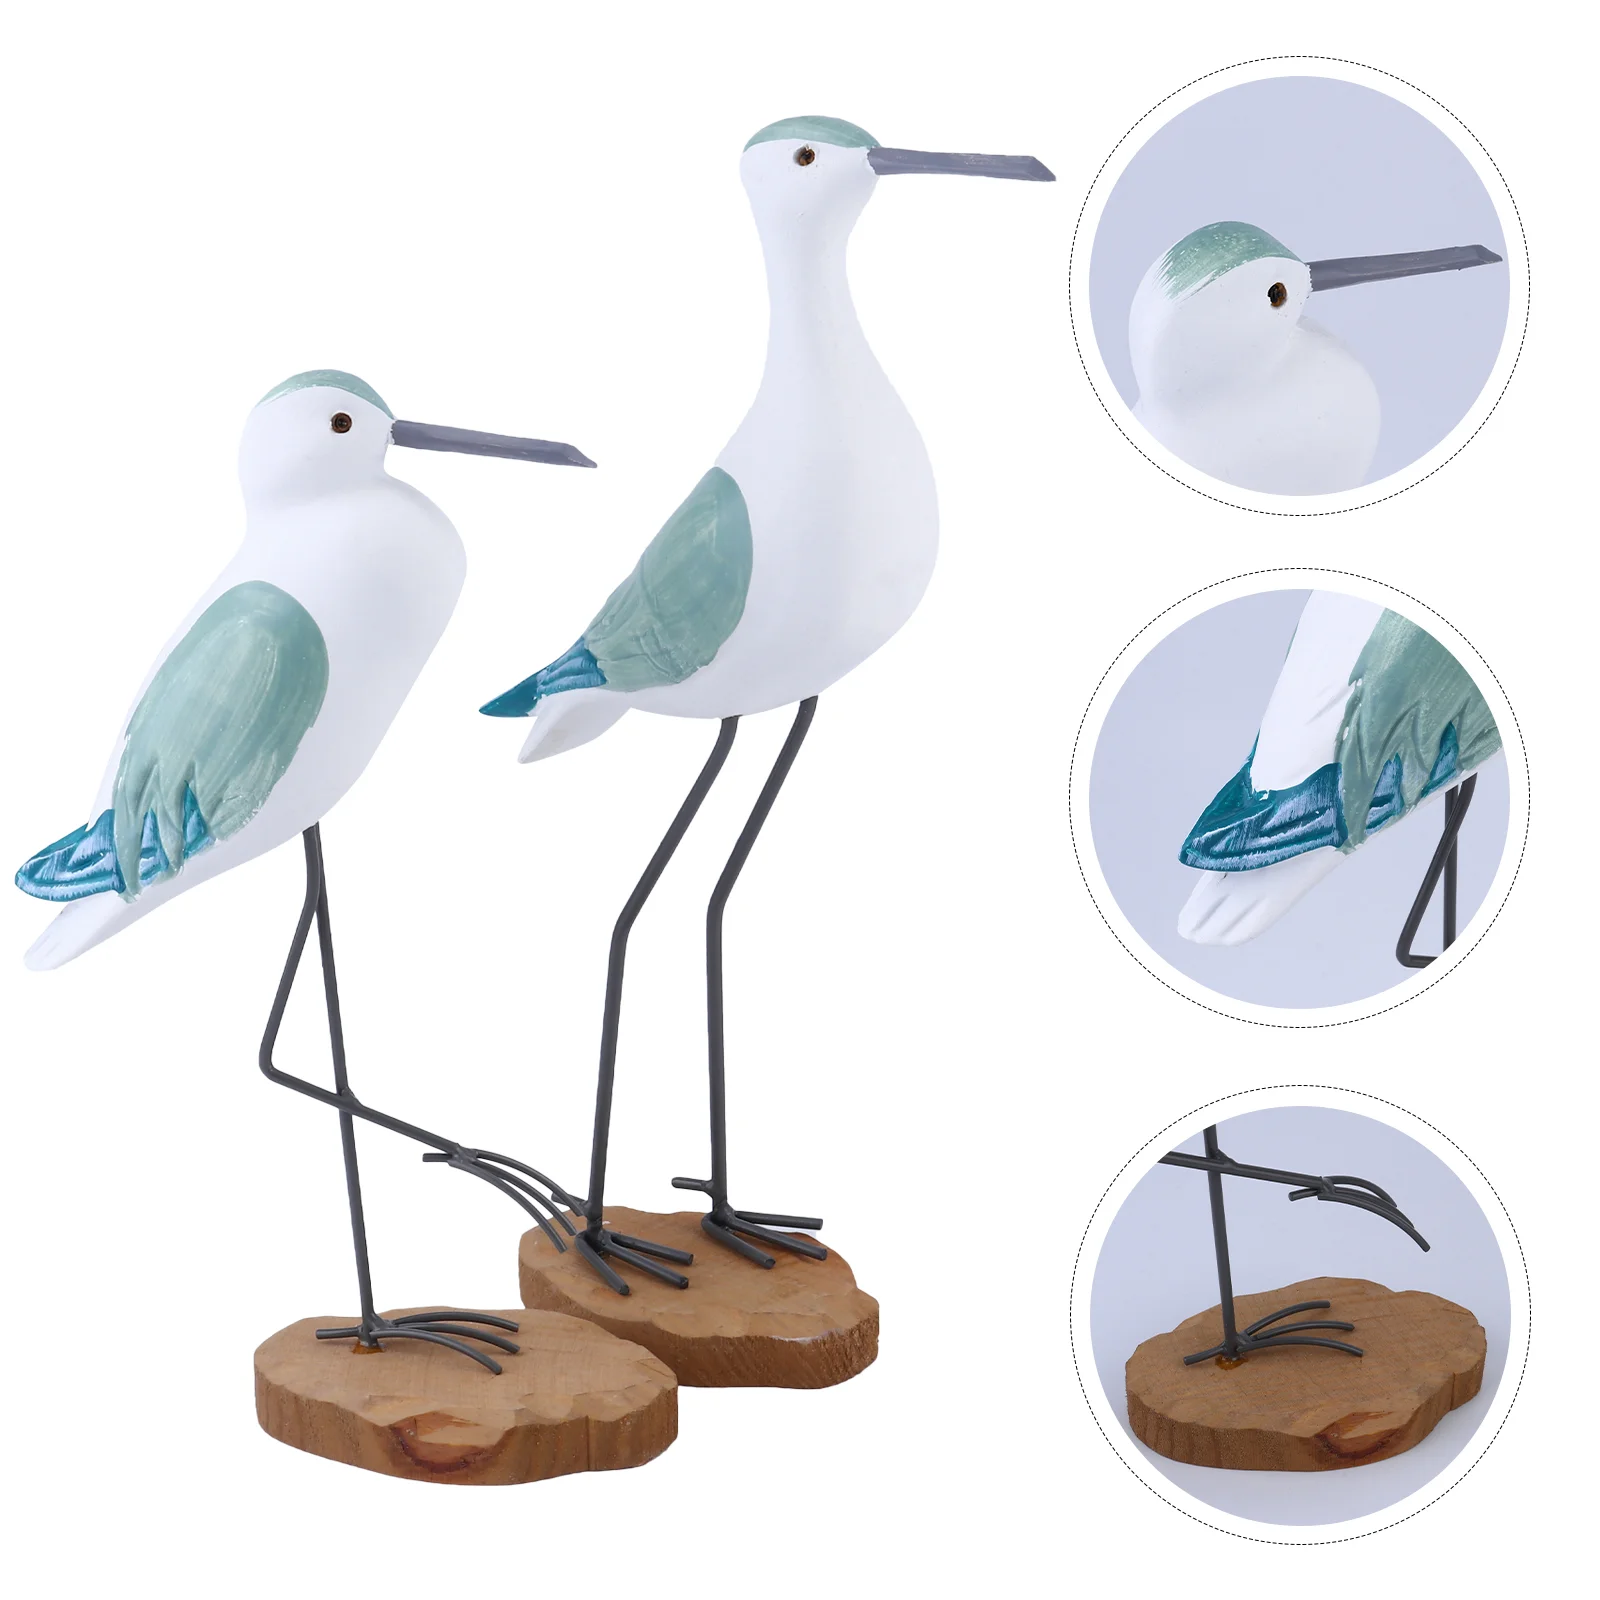 

2 Pcs Seagull Ornaments Wooden Craft Kids' Room Décor Table Decoration Desktop Sculpture Seaside Outdoor Home